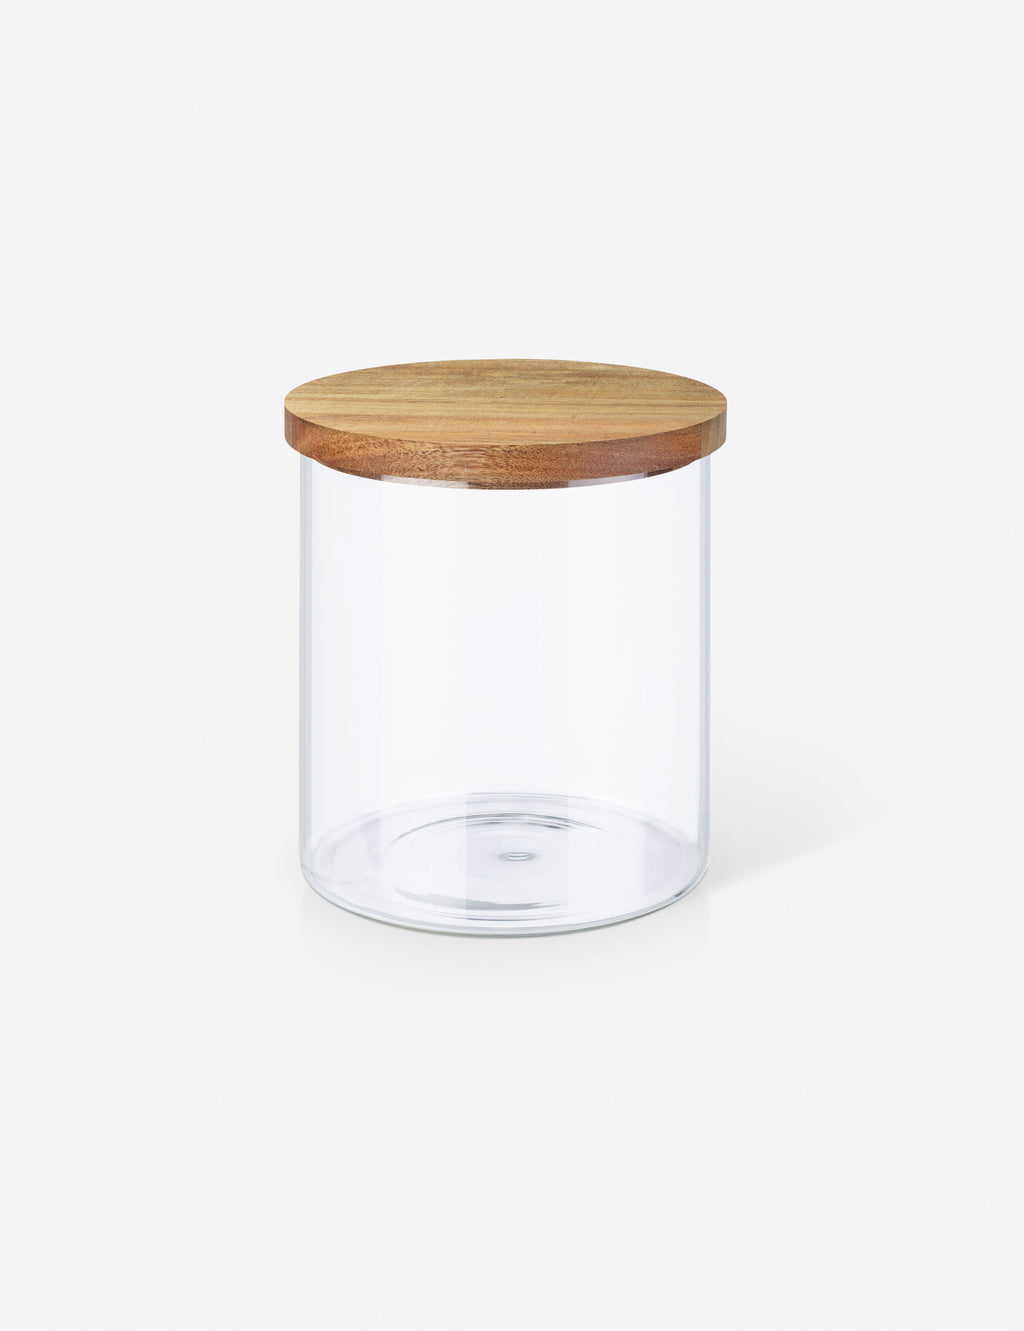 NeatMethod Glass Spice Jars with Acacia Wood Lids, Set of 10 + Reviews